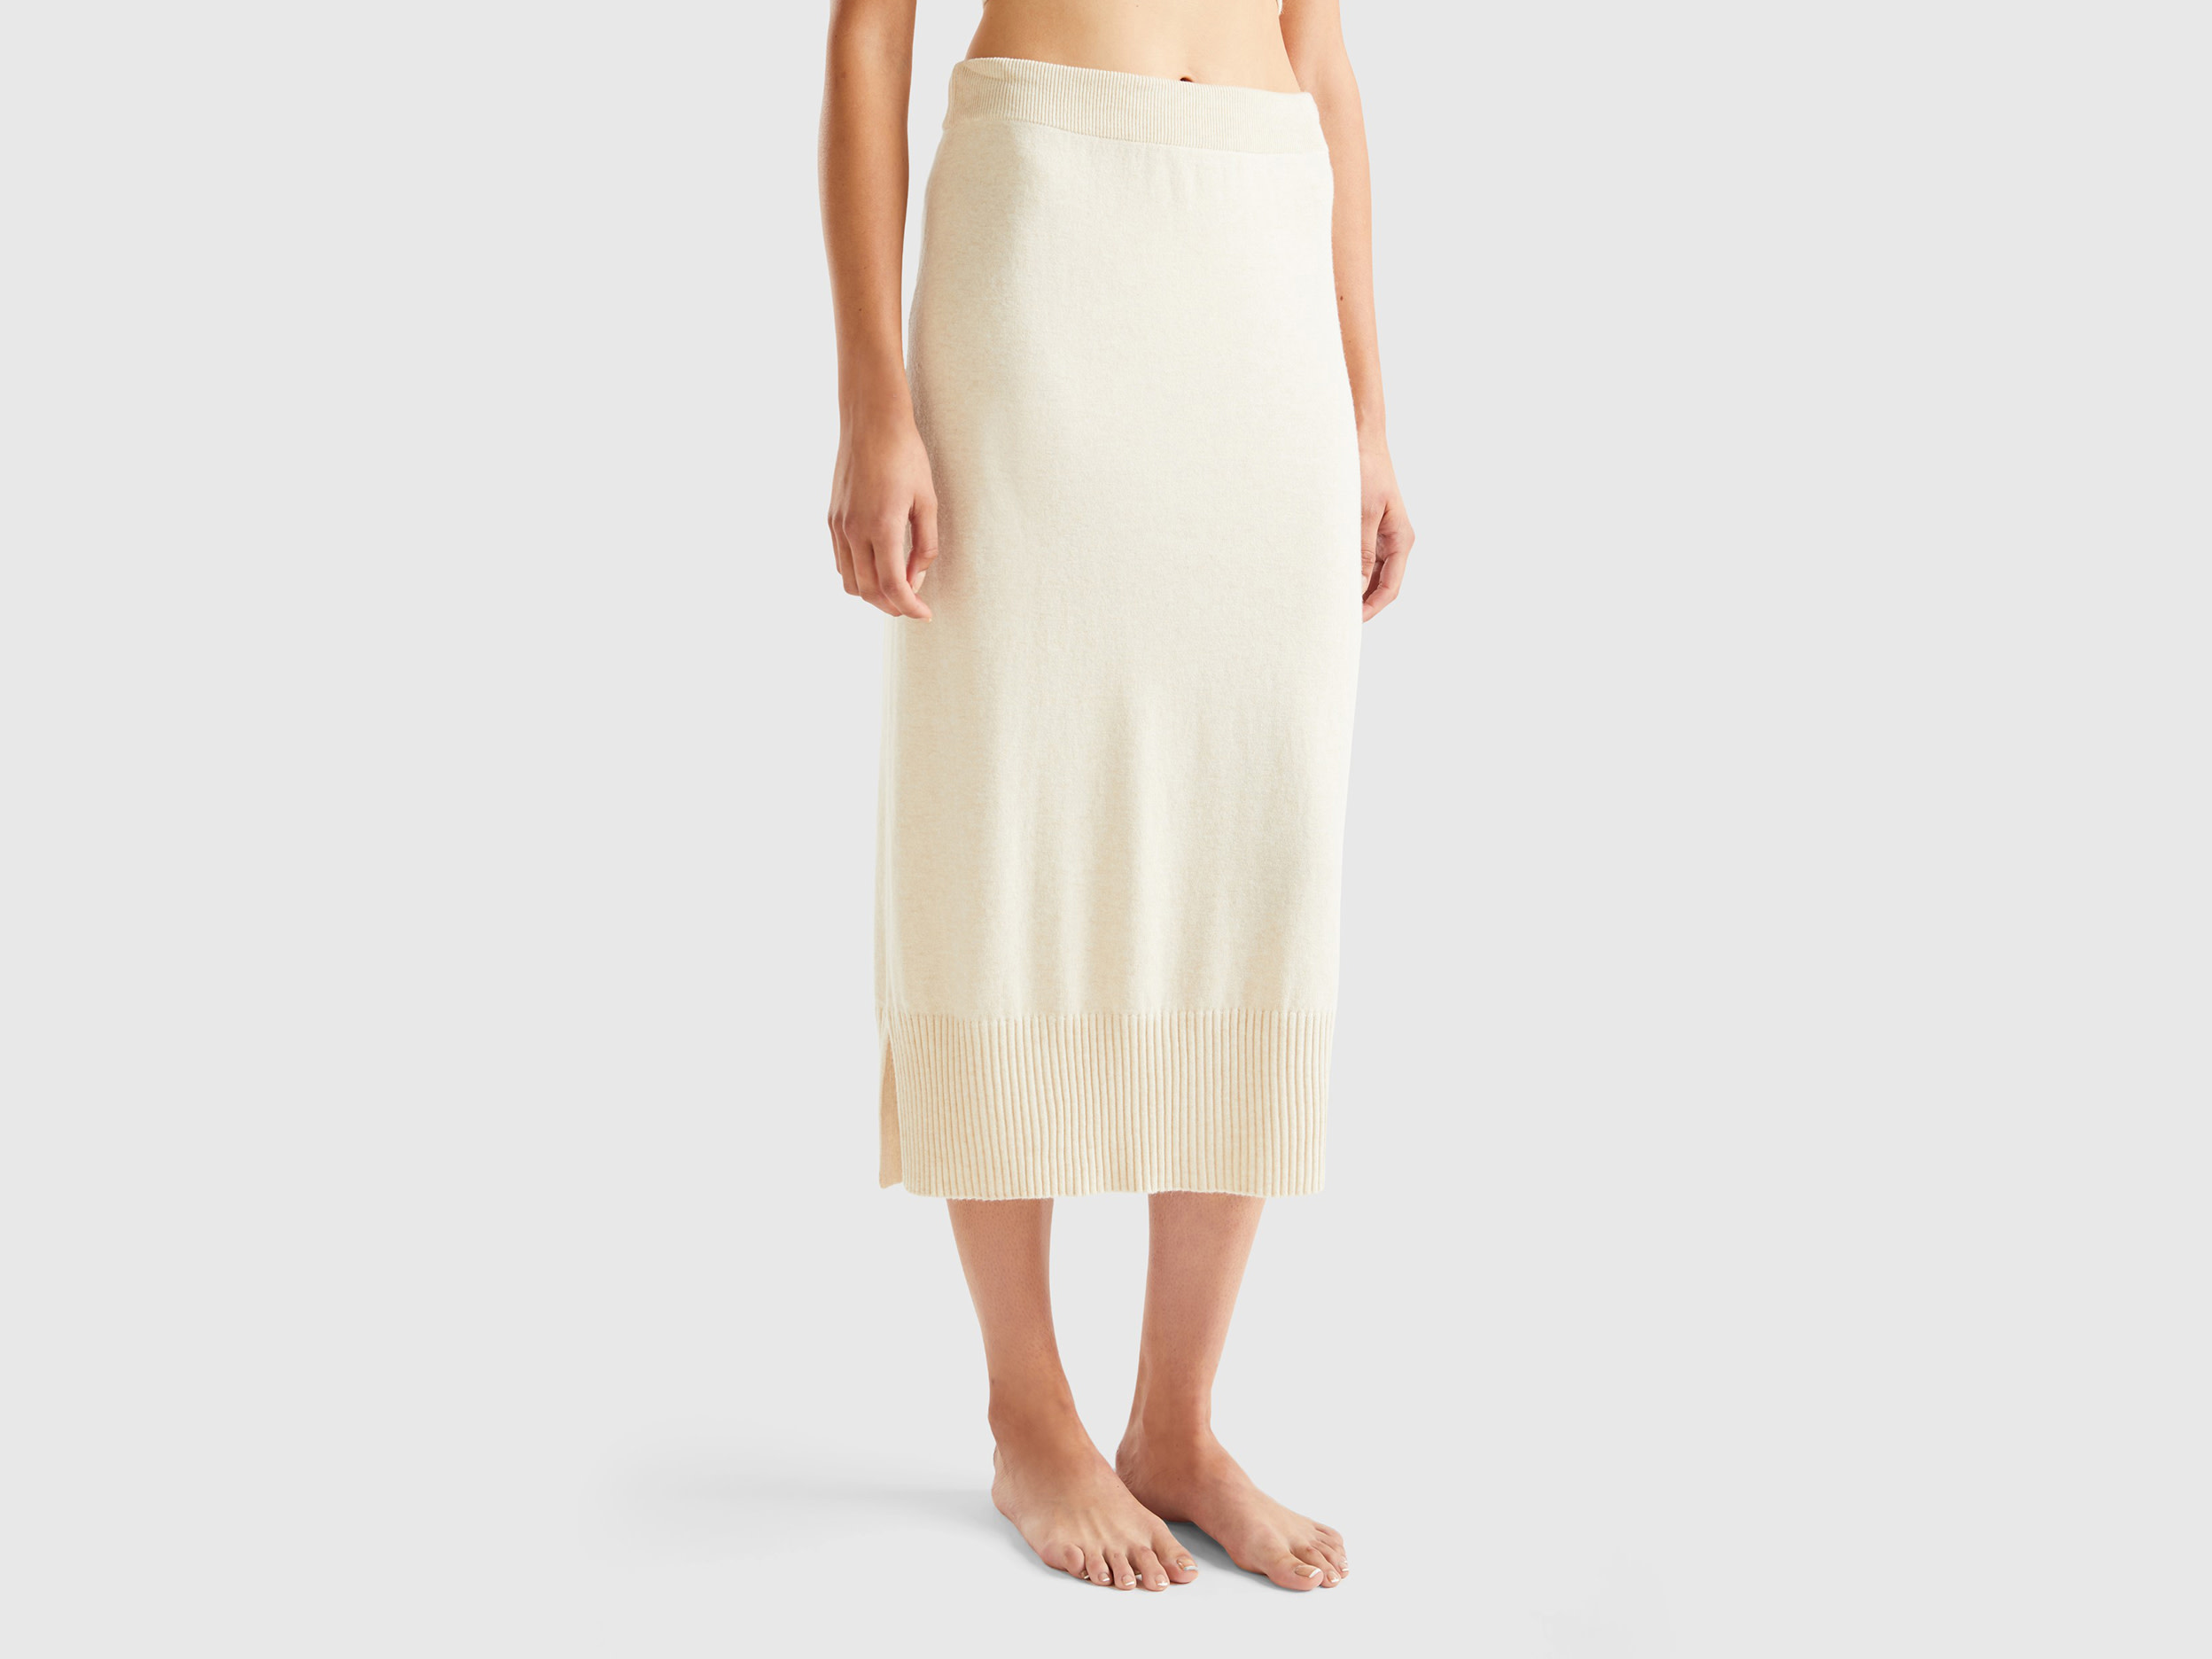 Benetton, Pencil Skirt In Cashmere Blend, size S, Creamy White, Women